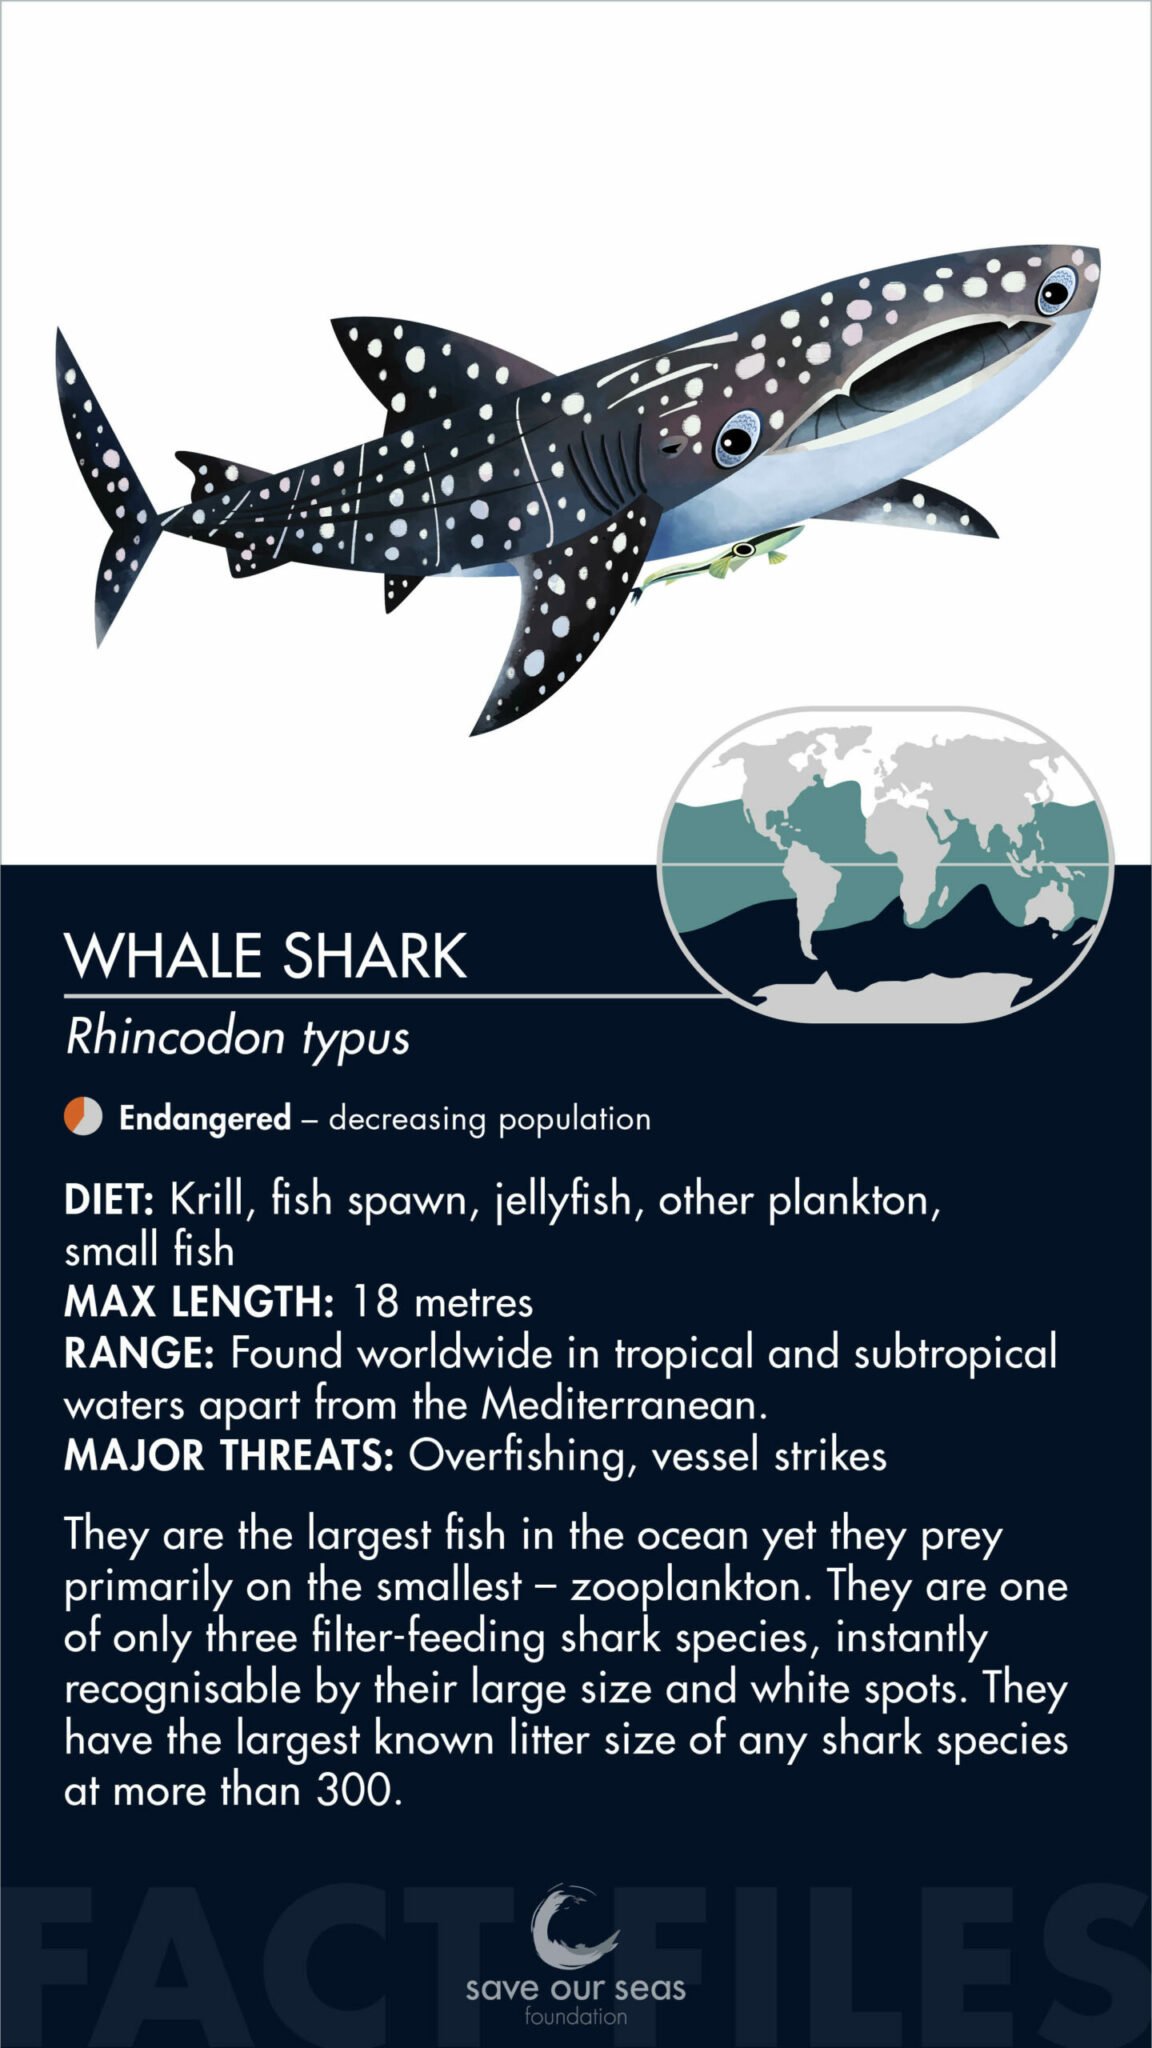 blue whale size comparison to whale shark